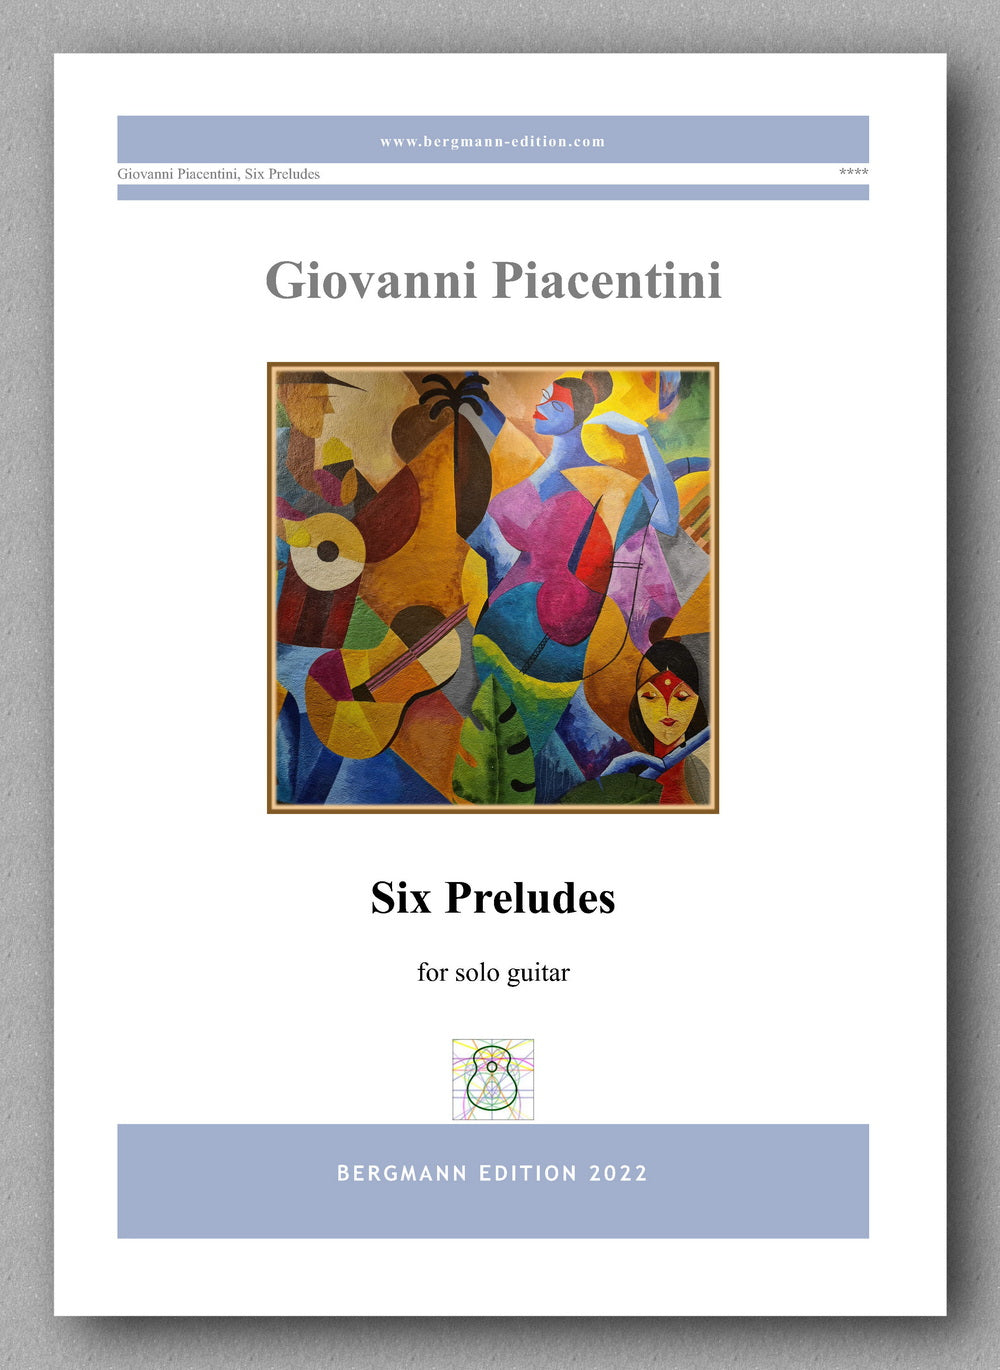 Giovanni Piacentini, Six Preludes - preview of the cover